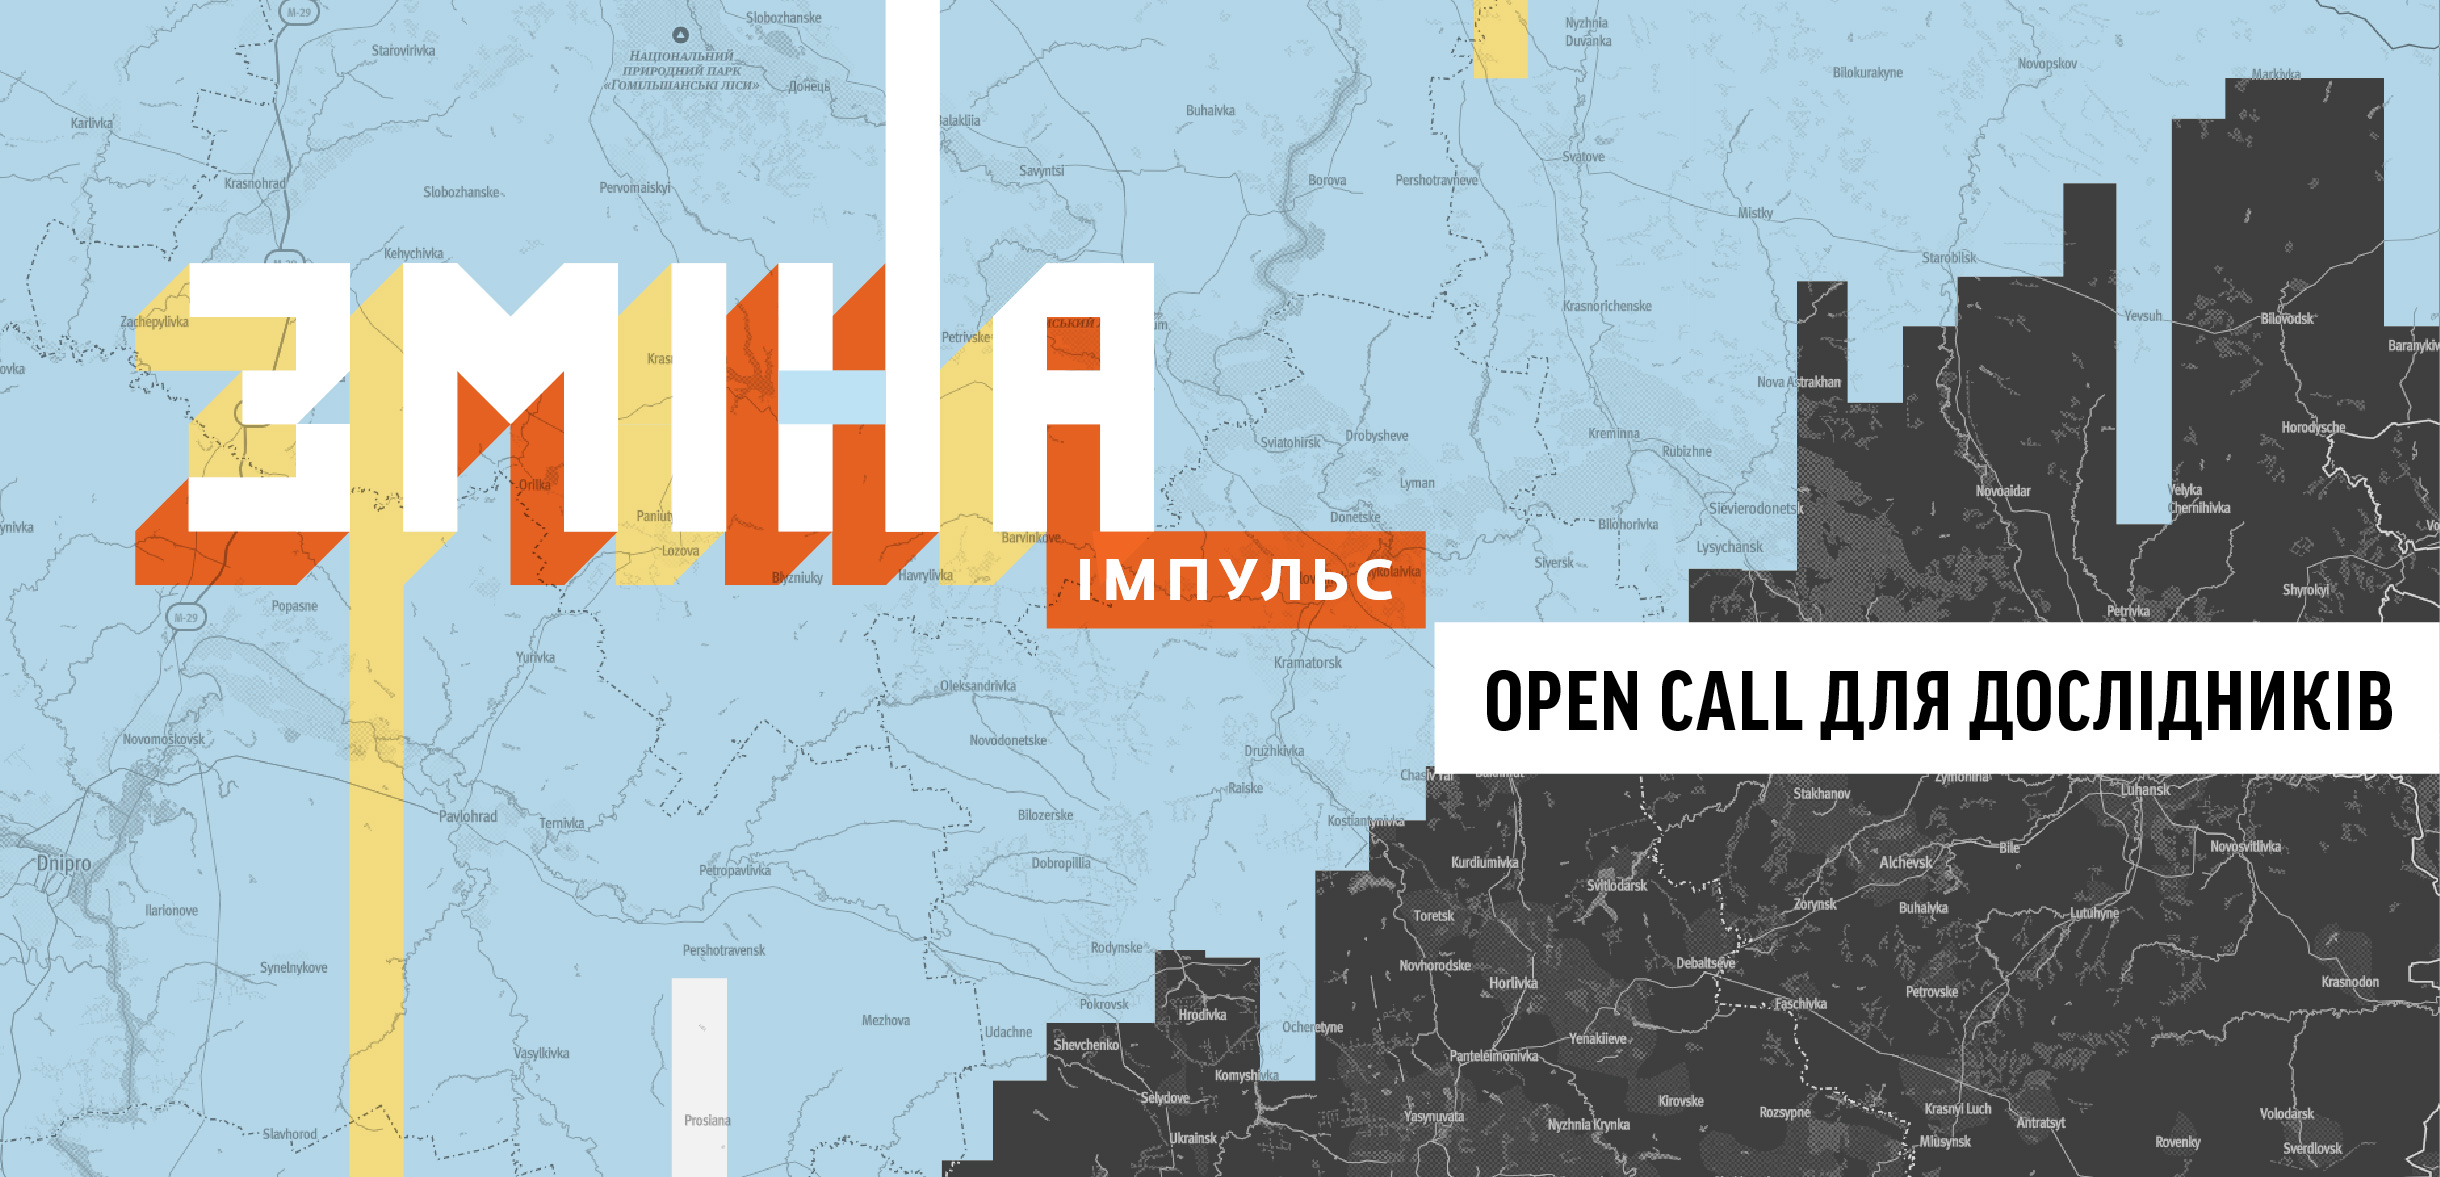 ZMINA: Impulse open call finalists announced